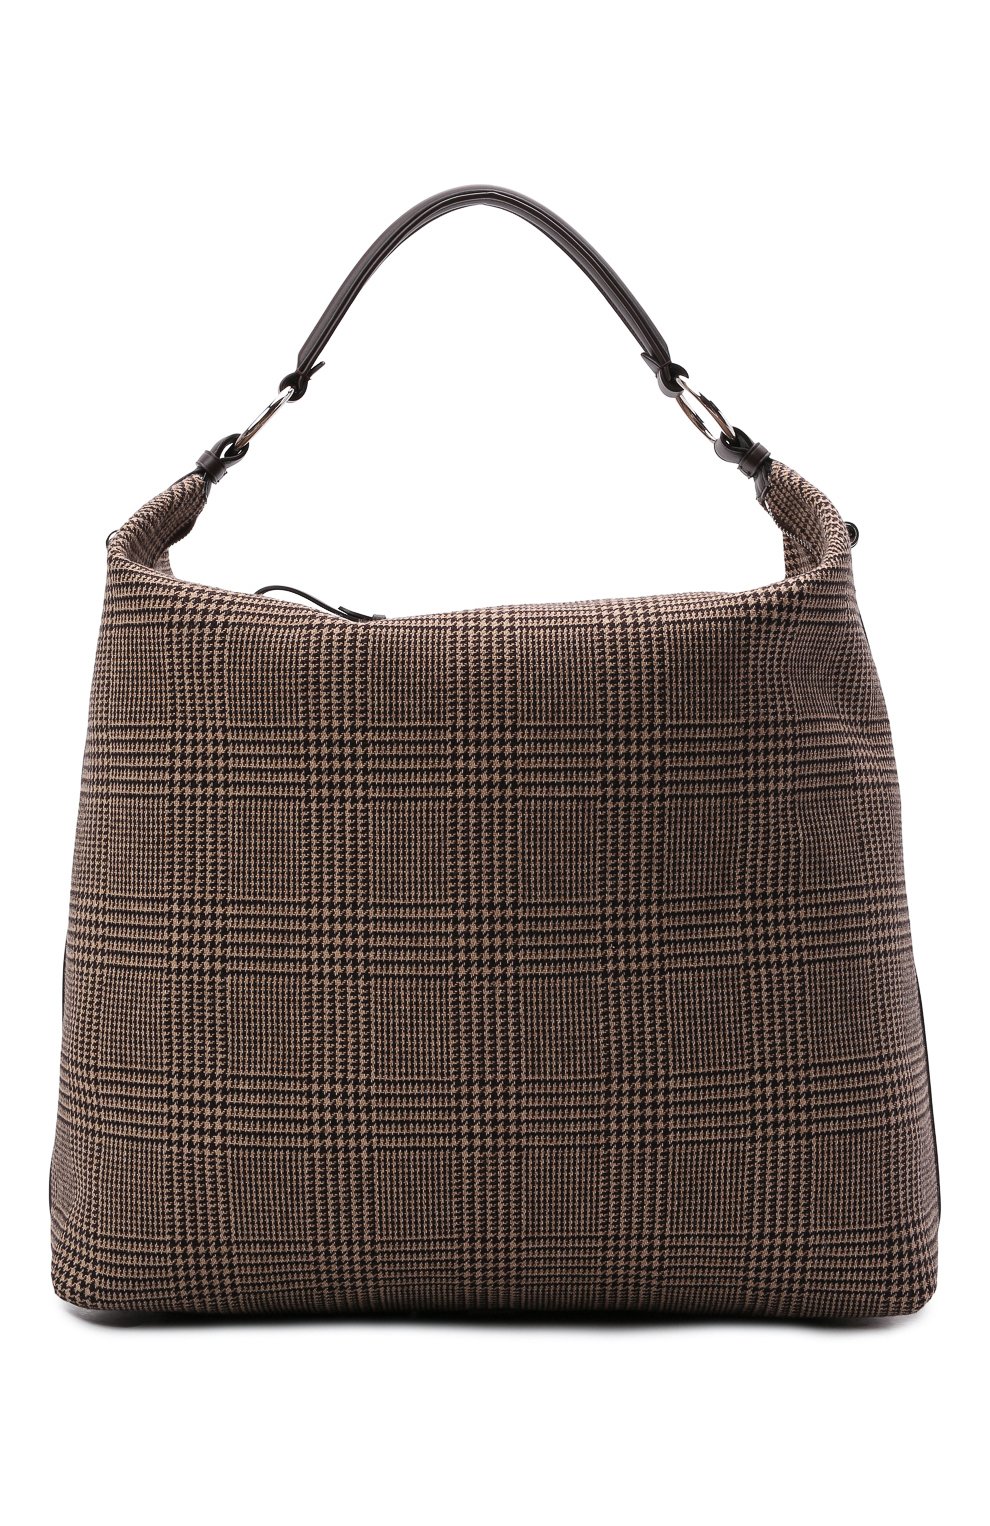 Женская сумка bridle large RALPH LAUREN коричневого цвета, арт. 435856510 | Фото 1 (Сумки-технические: Сумки top-handle; Ремень/цепочка: На ремешке; Материал: Текстиль; Размер: large)